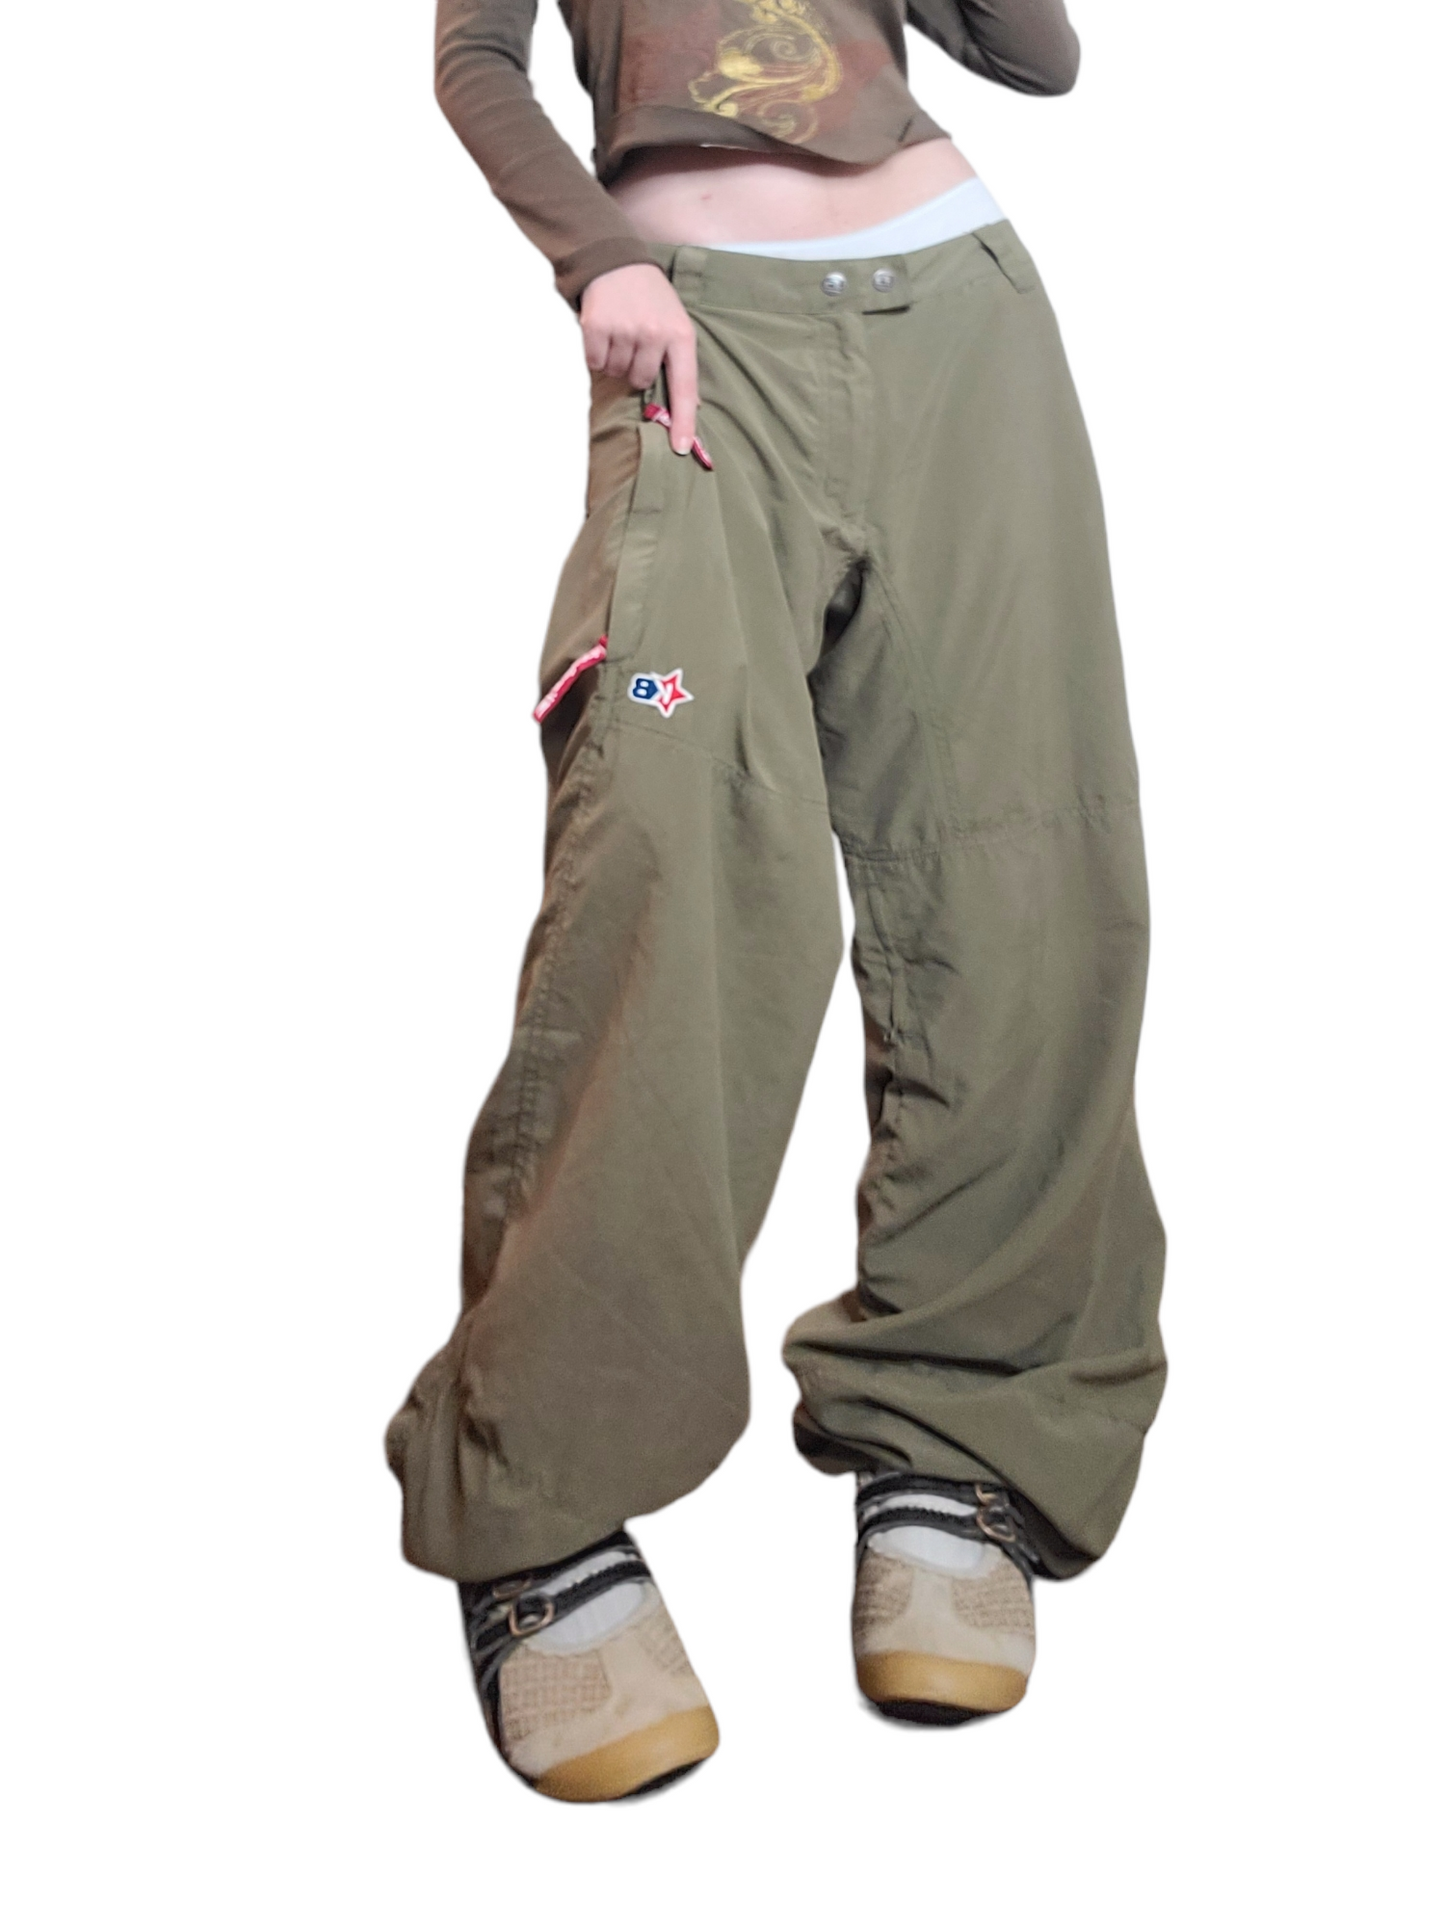 Cargo parachute pants gorpcore skater techwear sportwear 90s kaki grunge utility 